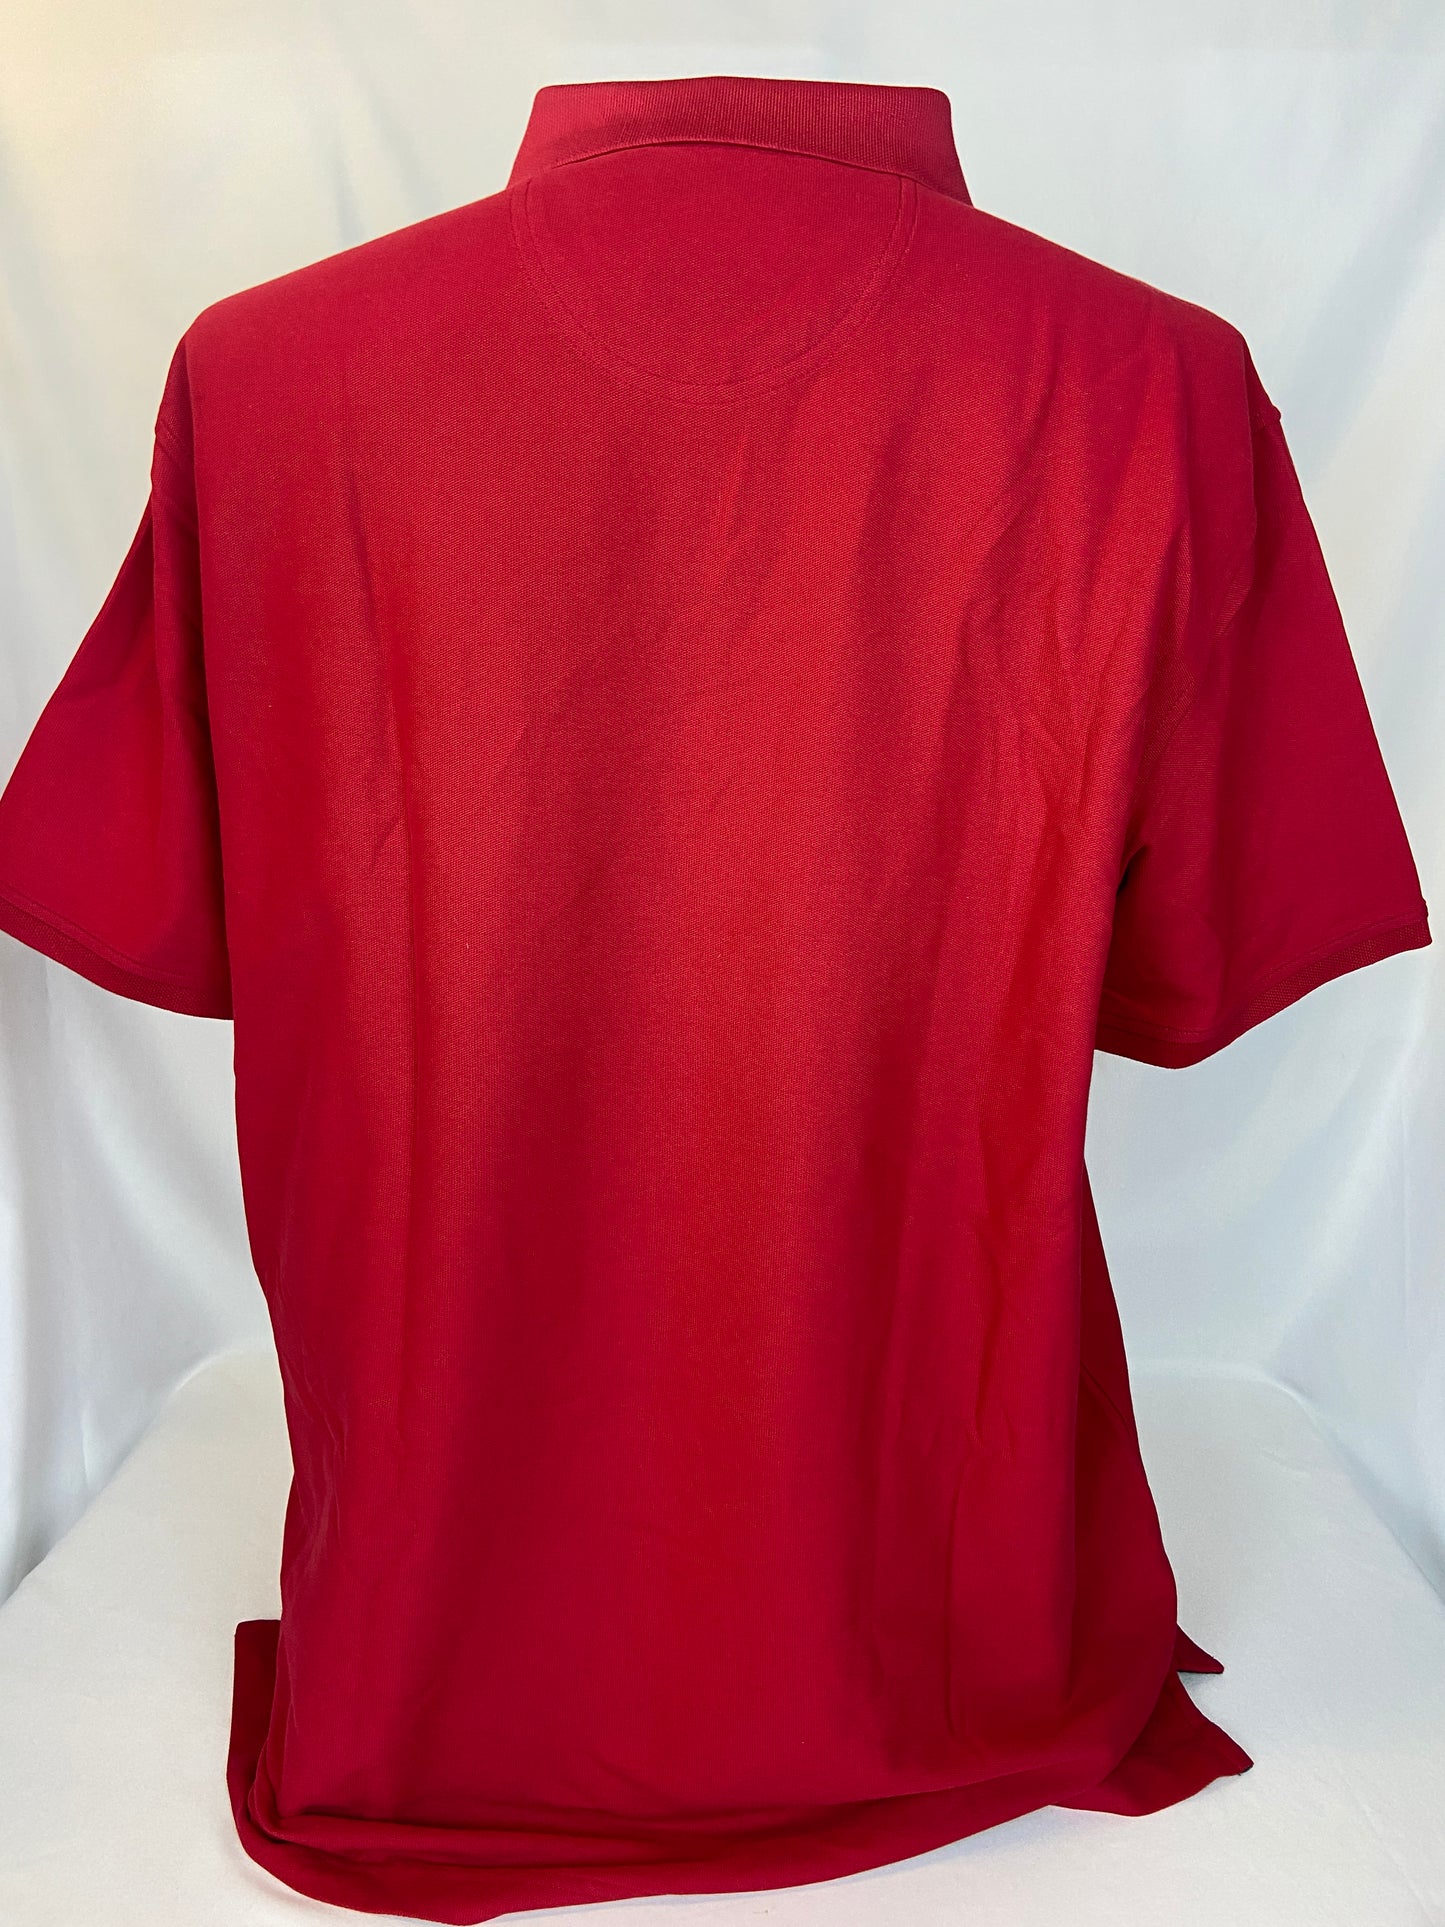 IZOD XXL Red Short Sleeve Polo Shirt NWT